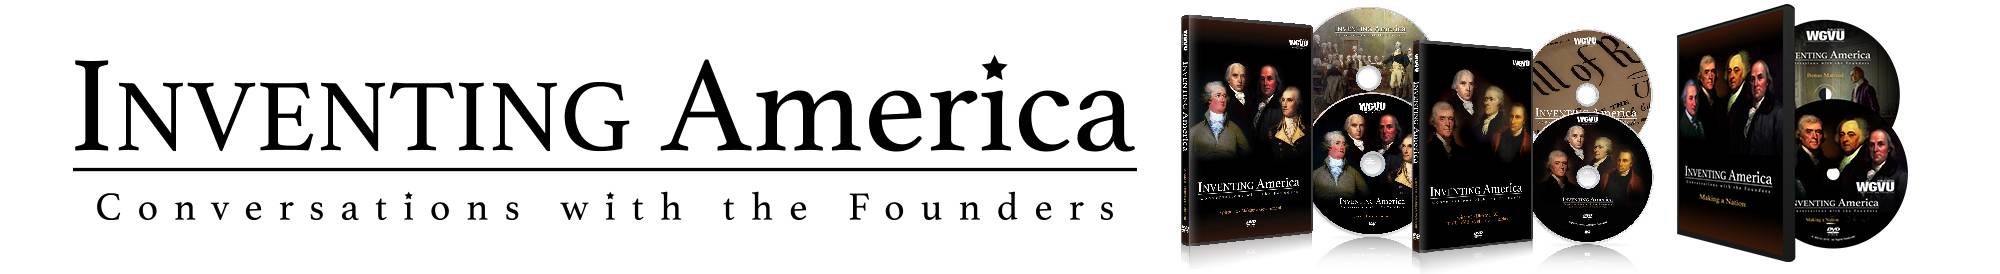 WGVU Inventing America Banner